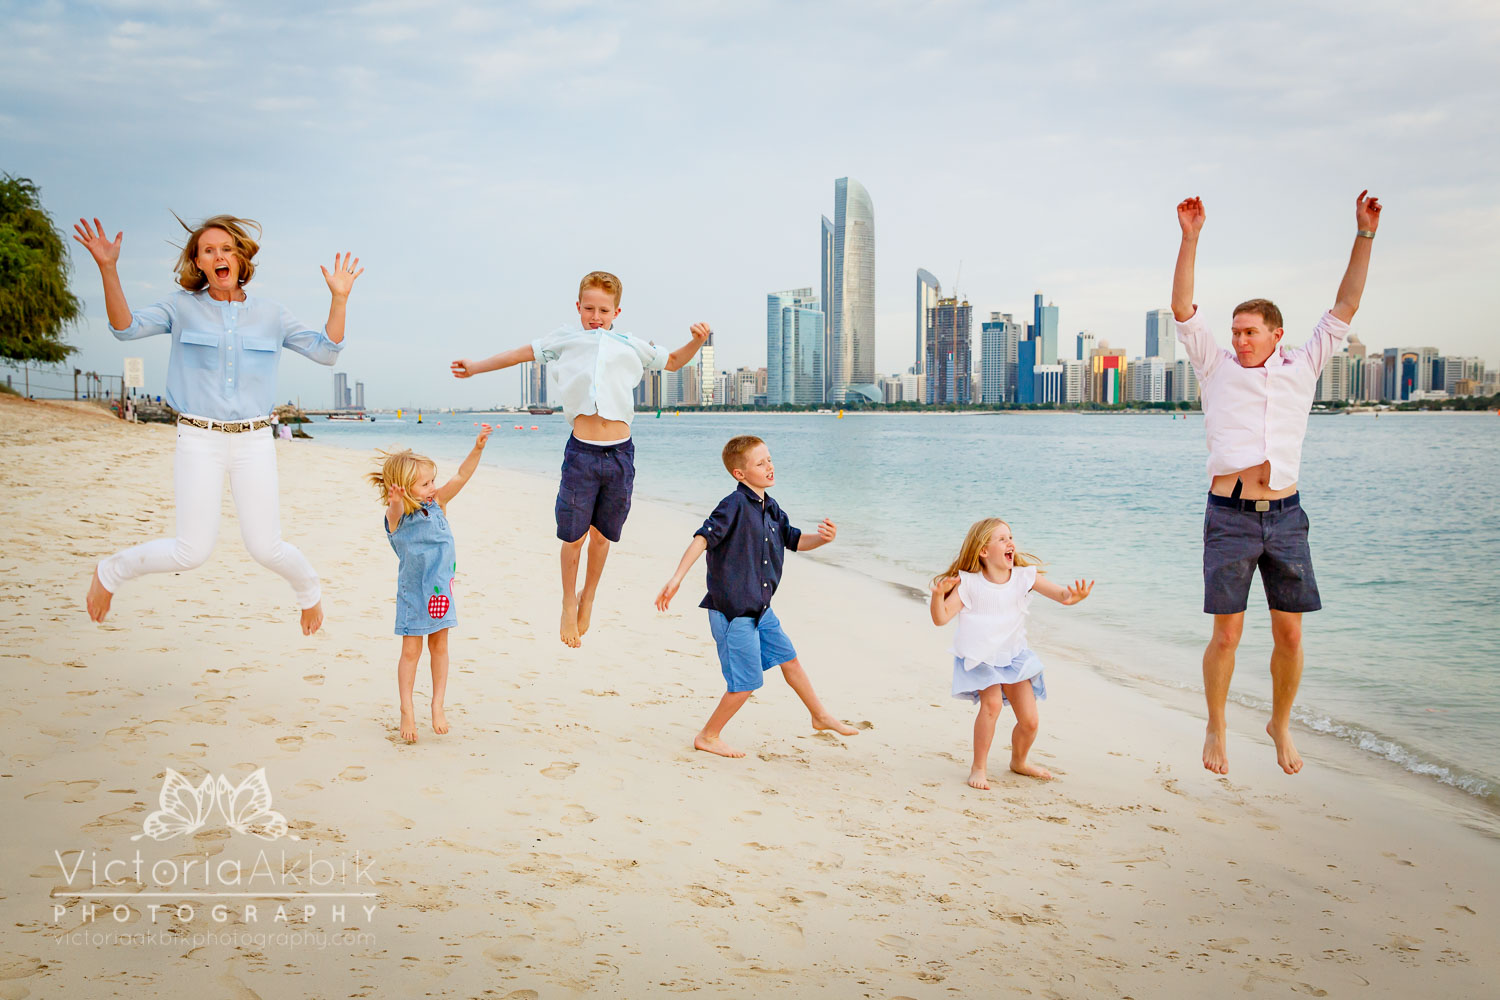 Abu Dhabi Souvenir Family Shoot | Abu Dhabi Lifestyle Family Photography » Victoria Akbik Photography